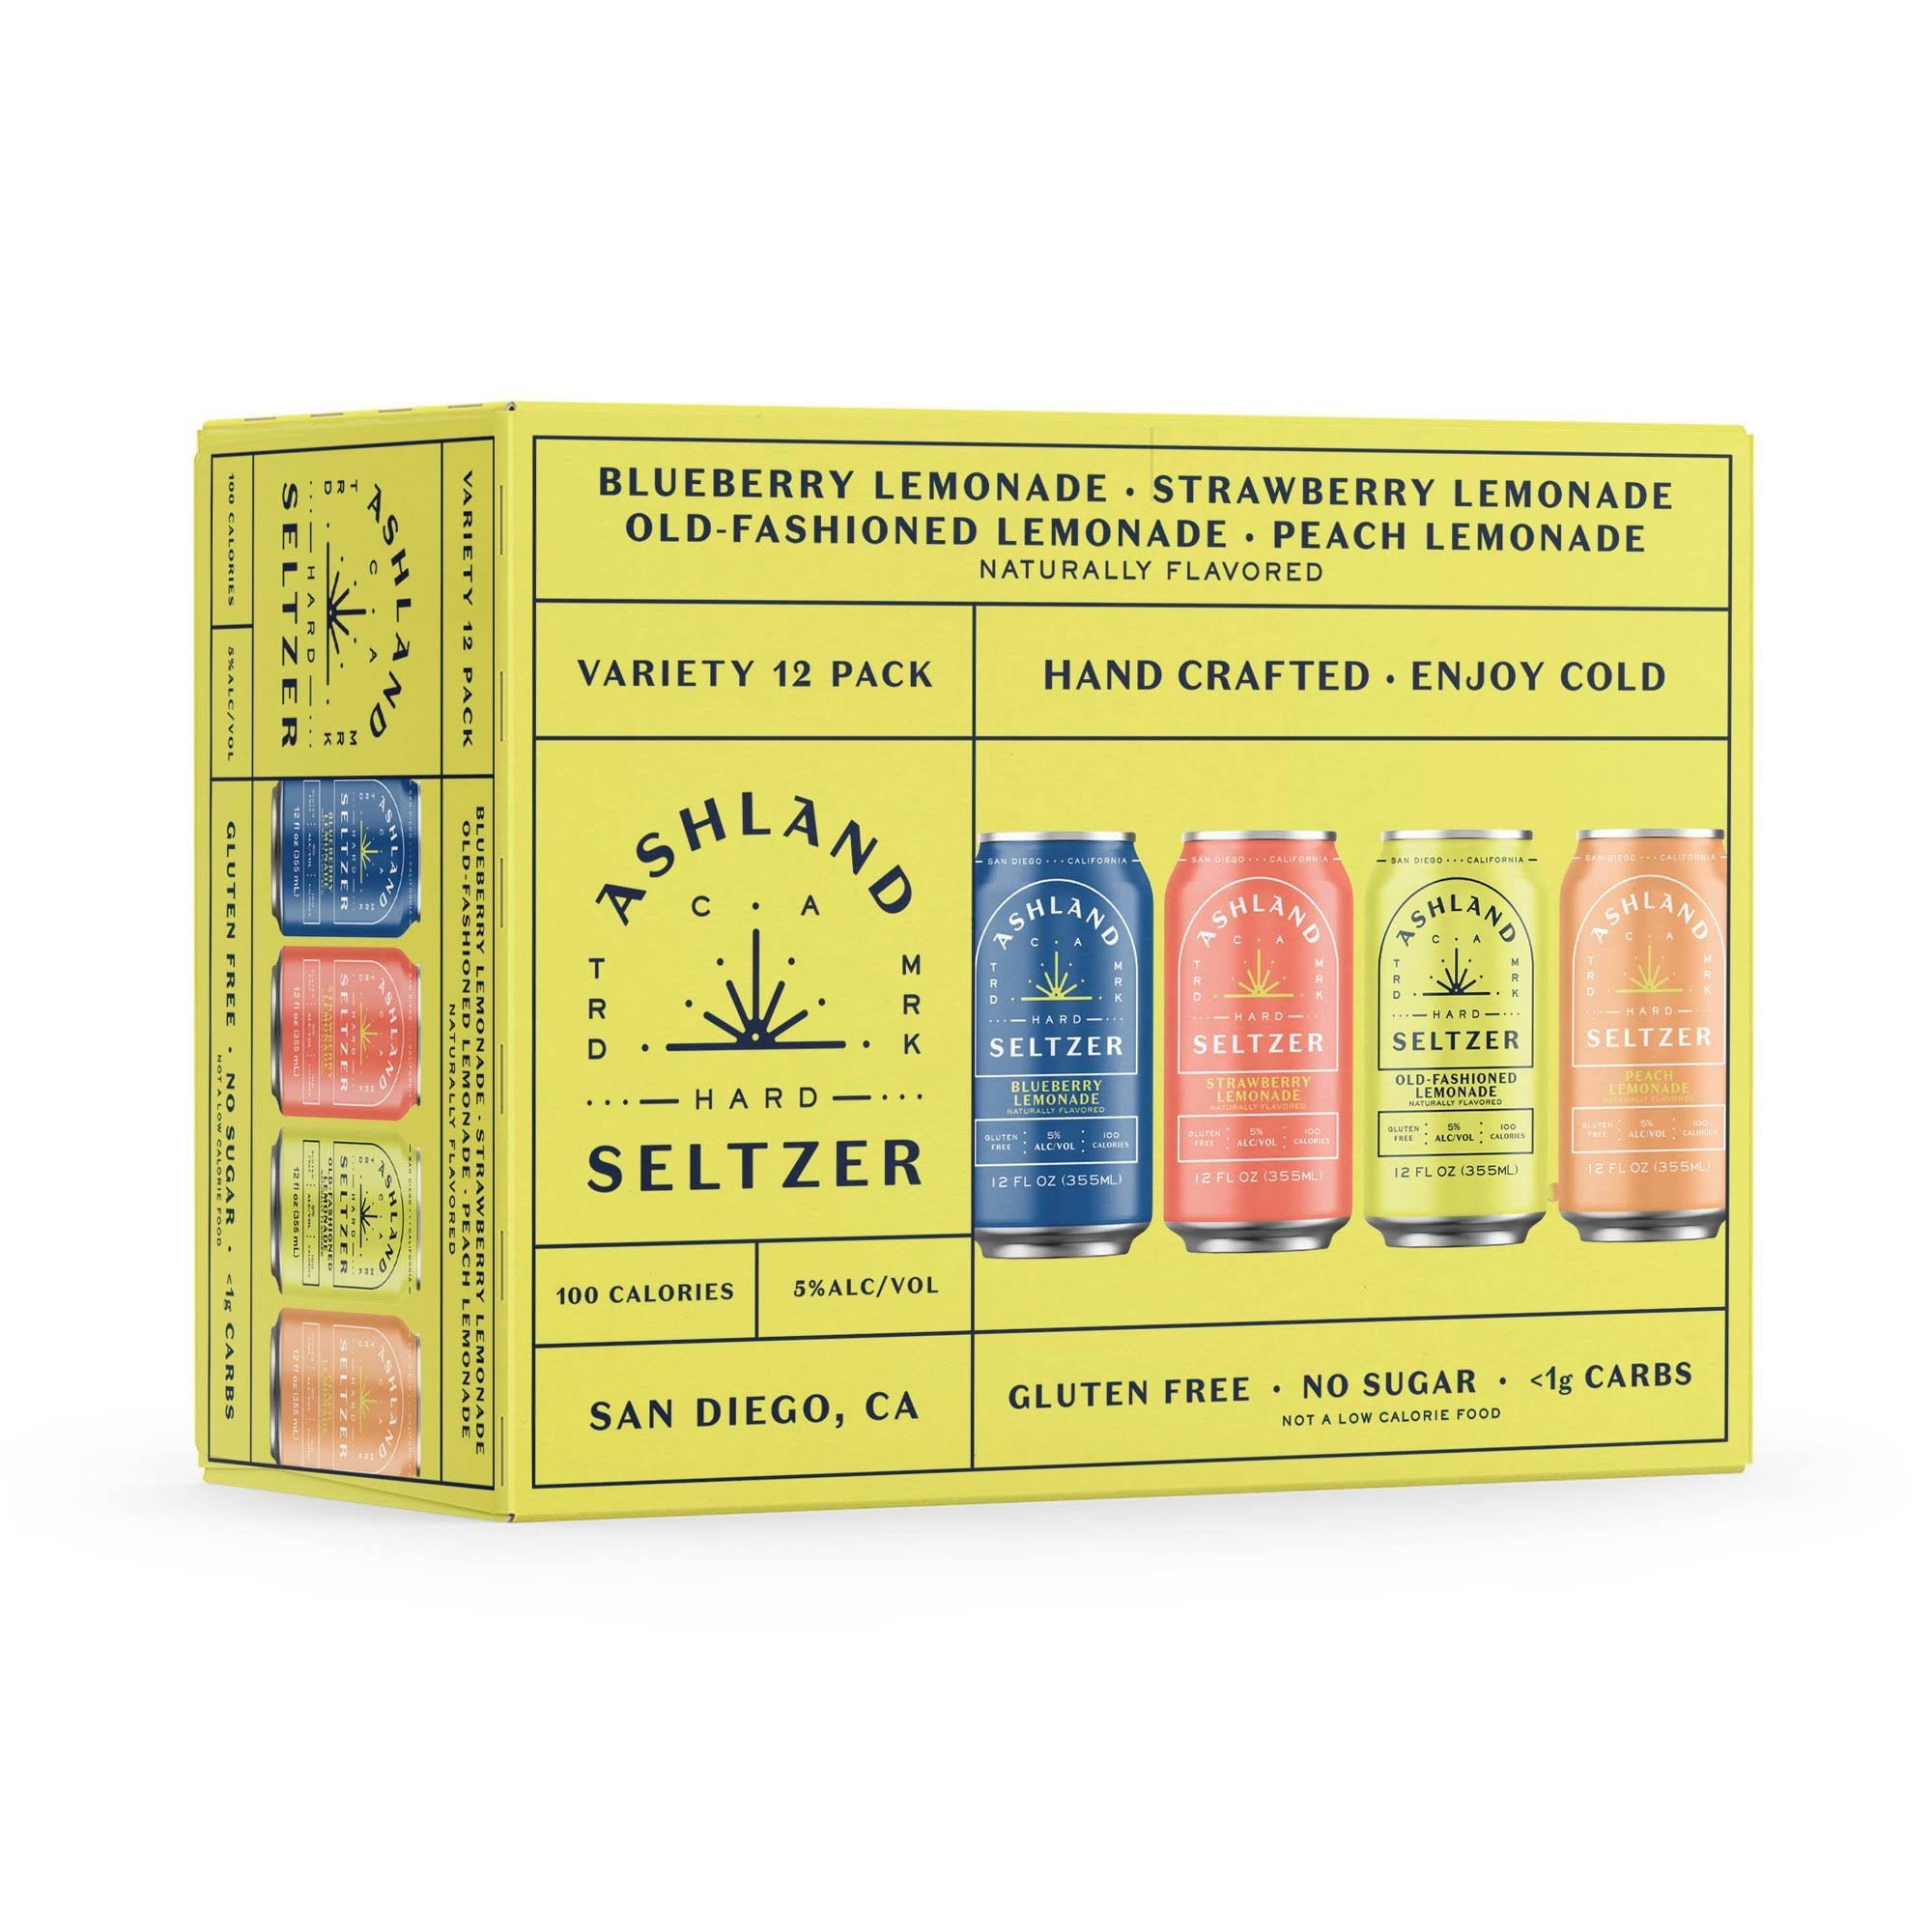 Ashland Hard Seltzer Hard Seltzer, Variety 12 Pack - 12 pack, 12 fl oz cans